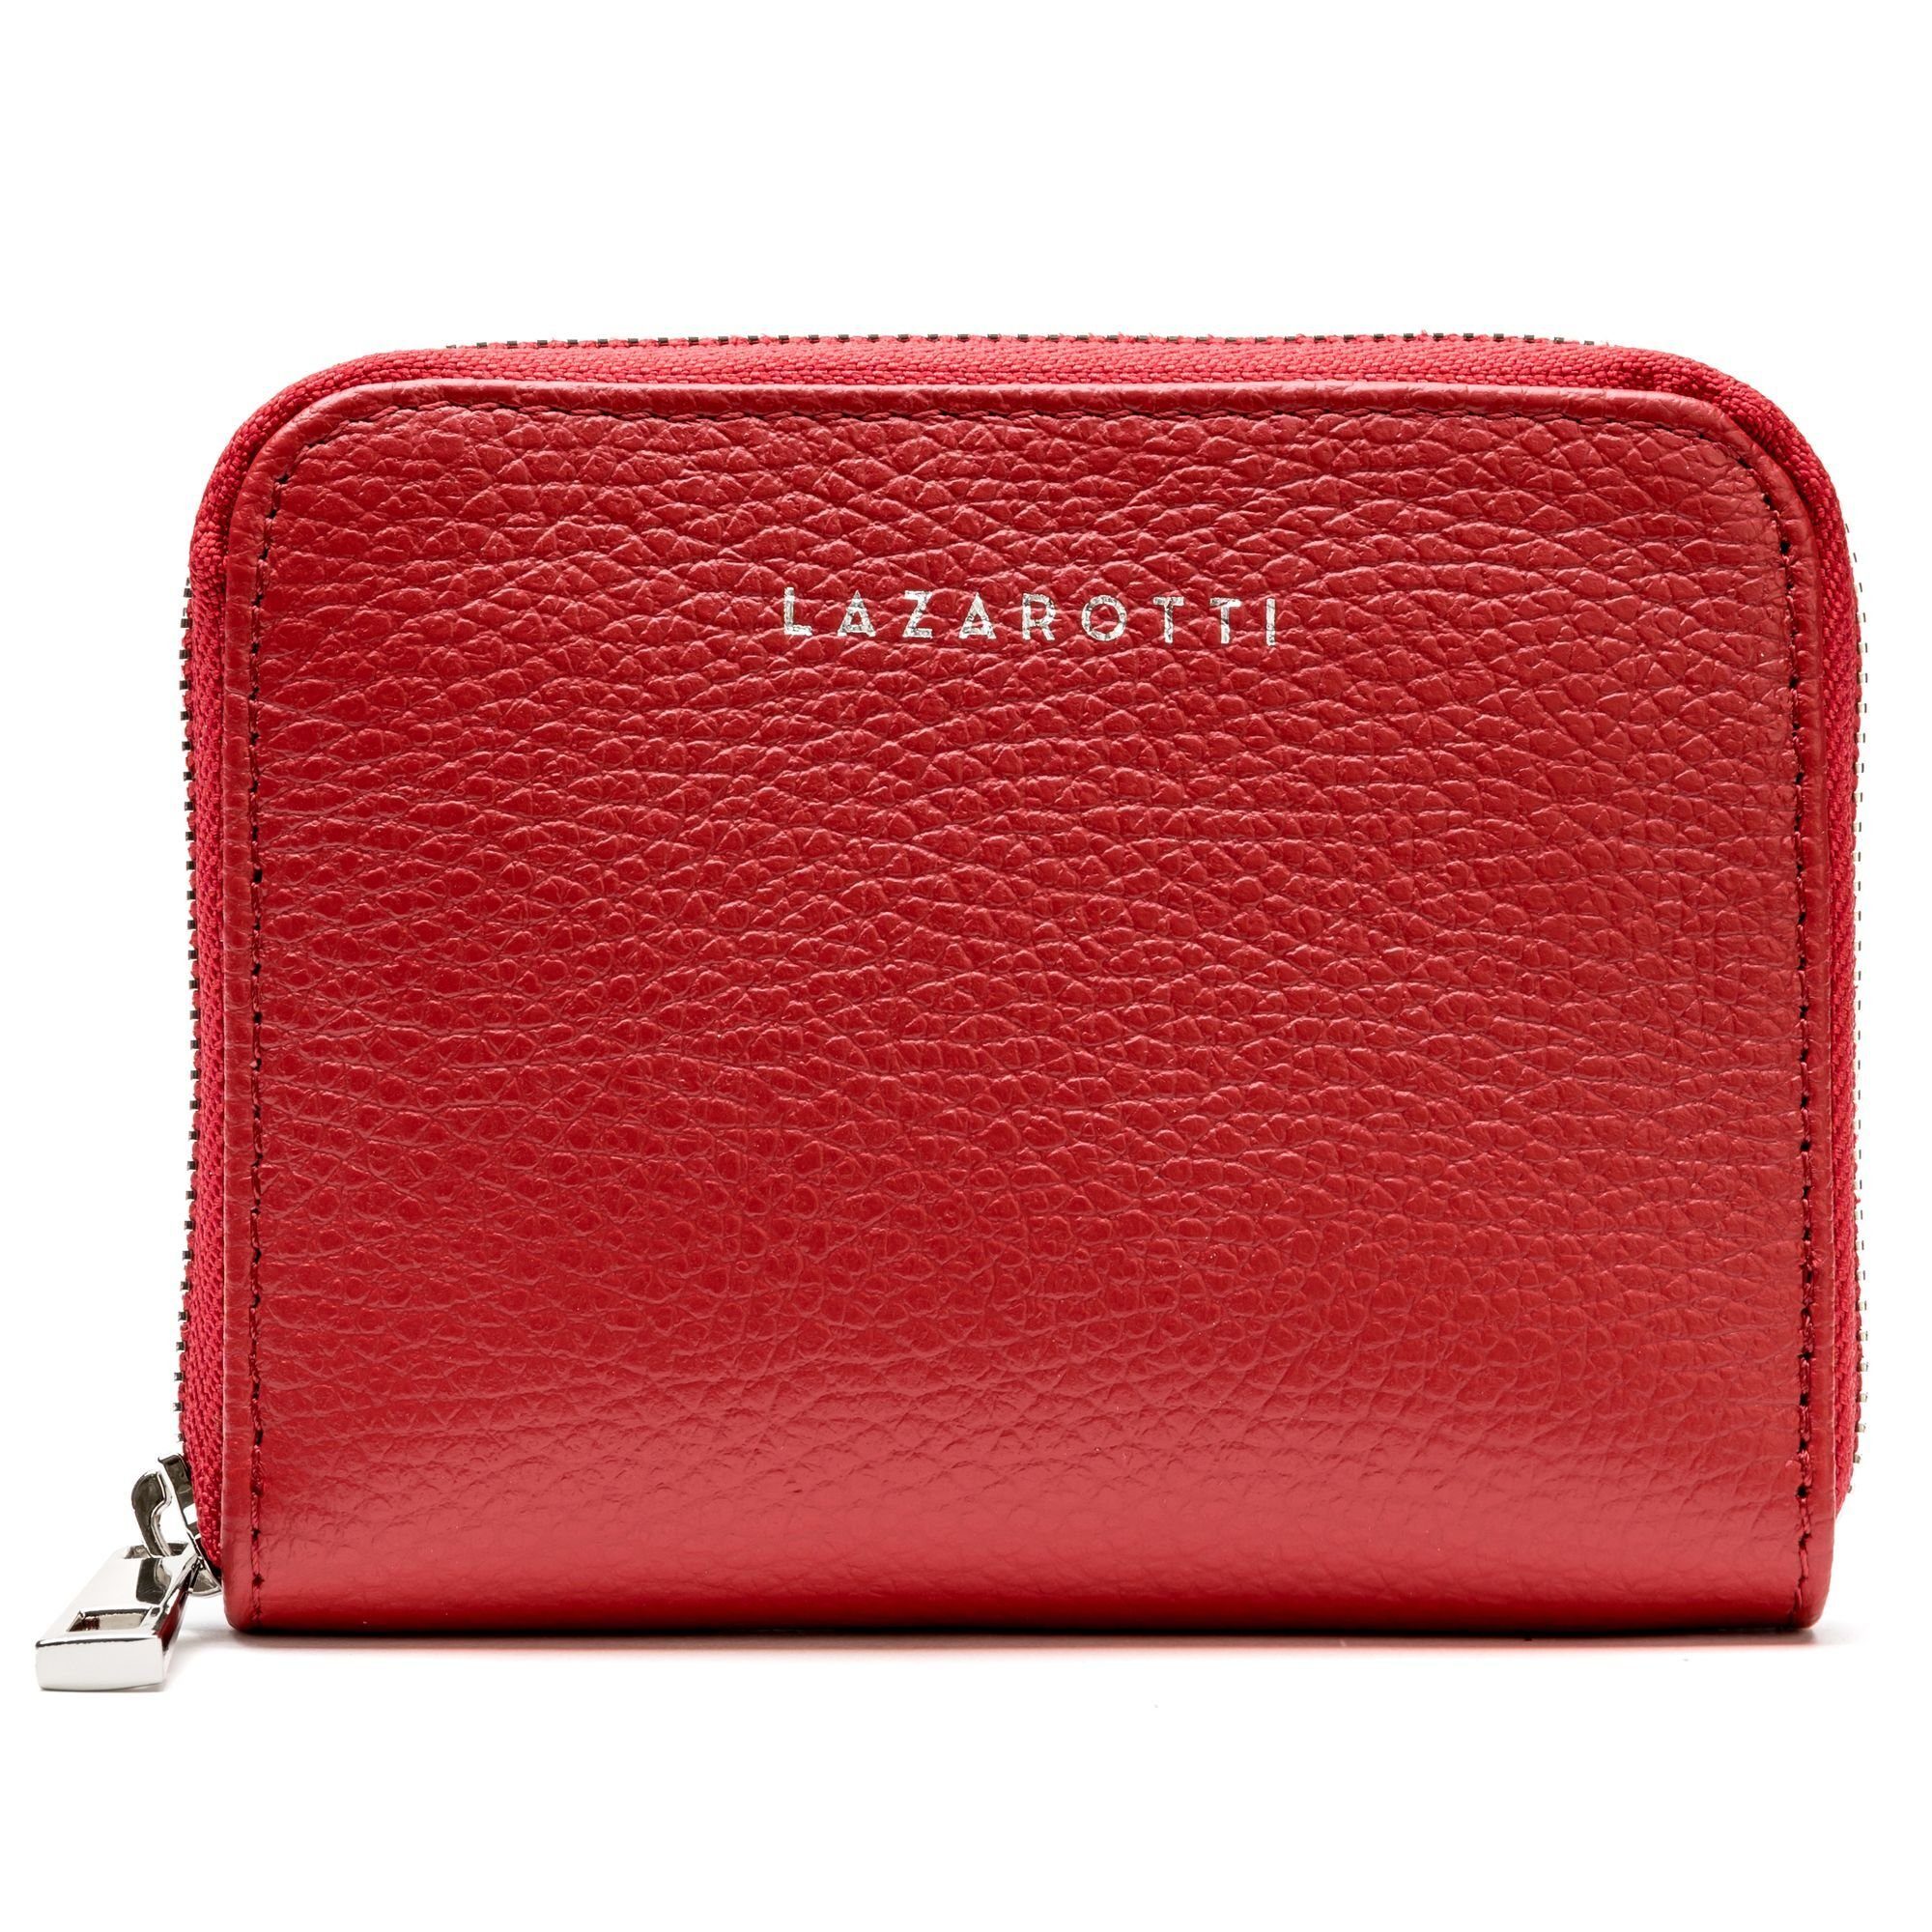 Leather, Leder Milano Lazarotti red Geldbörse